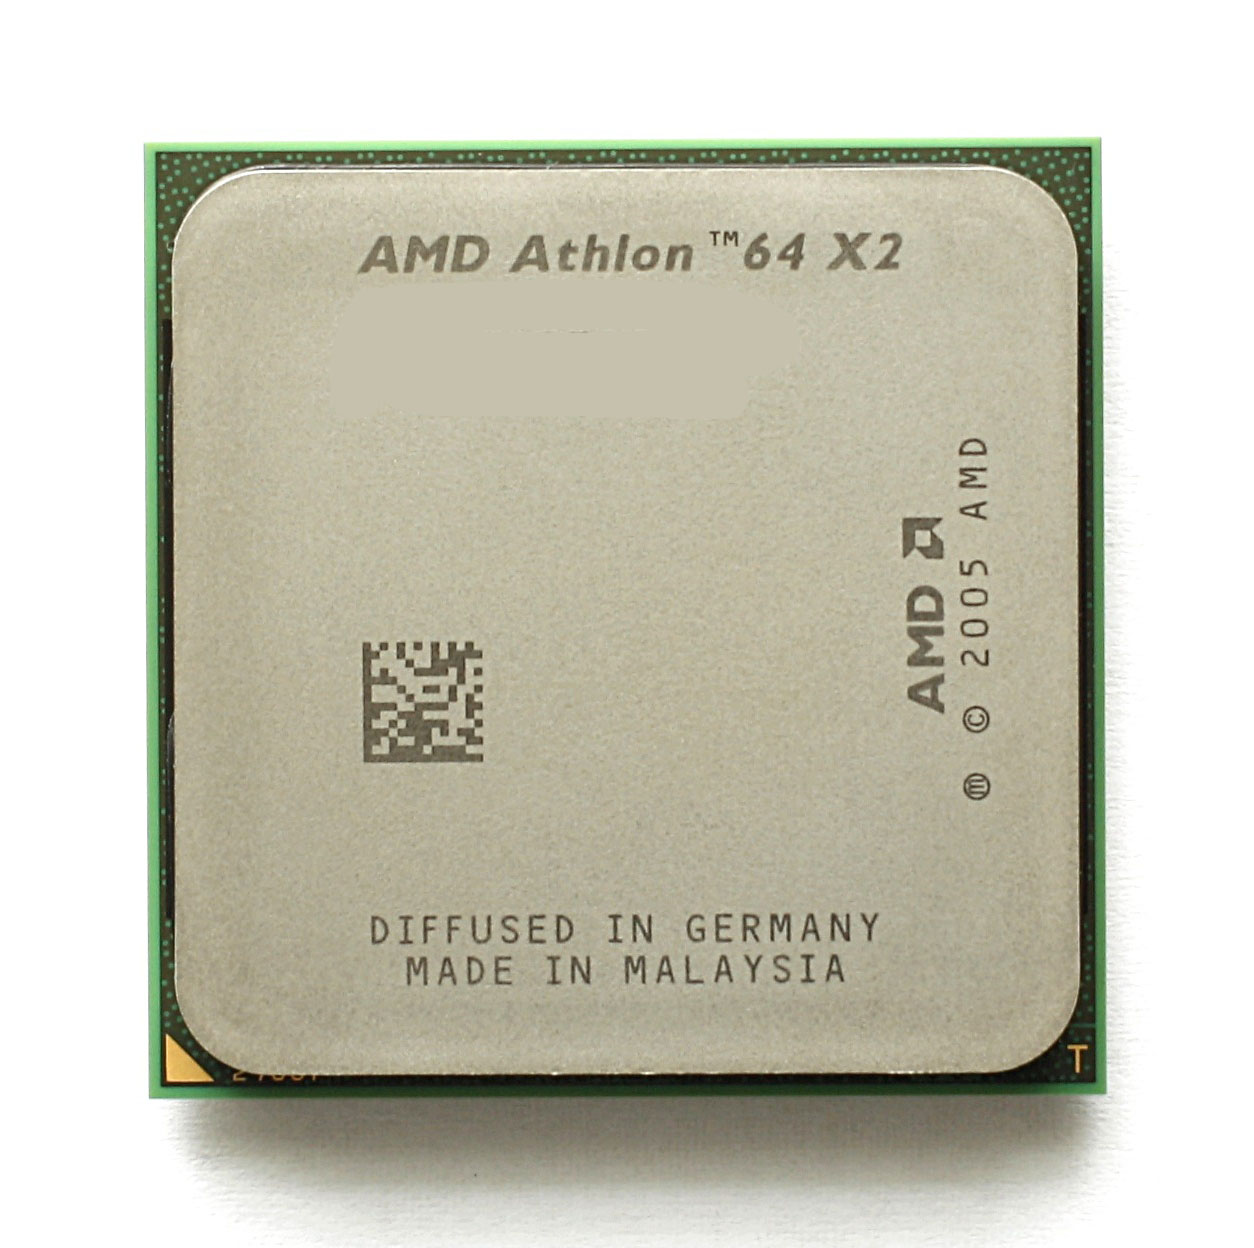 Amd Athlon 64 Drivers